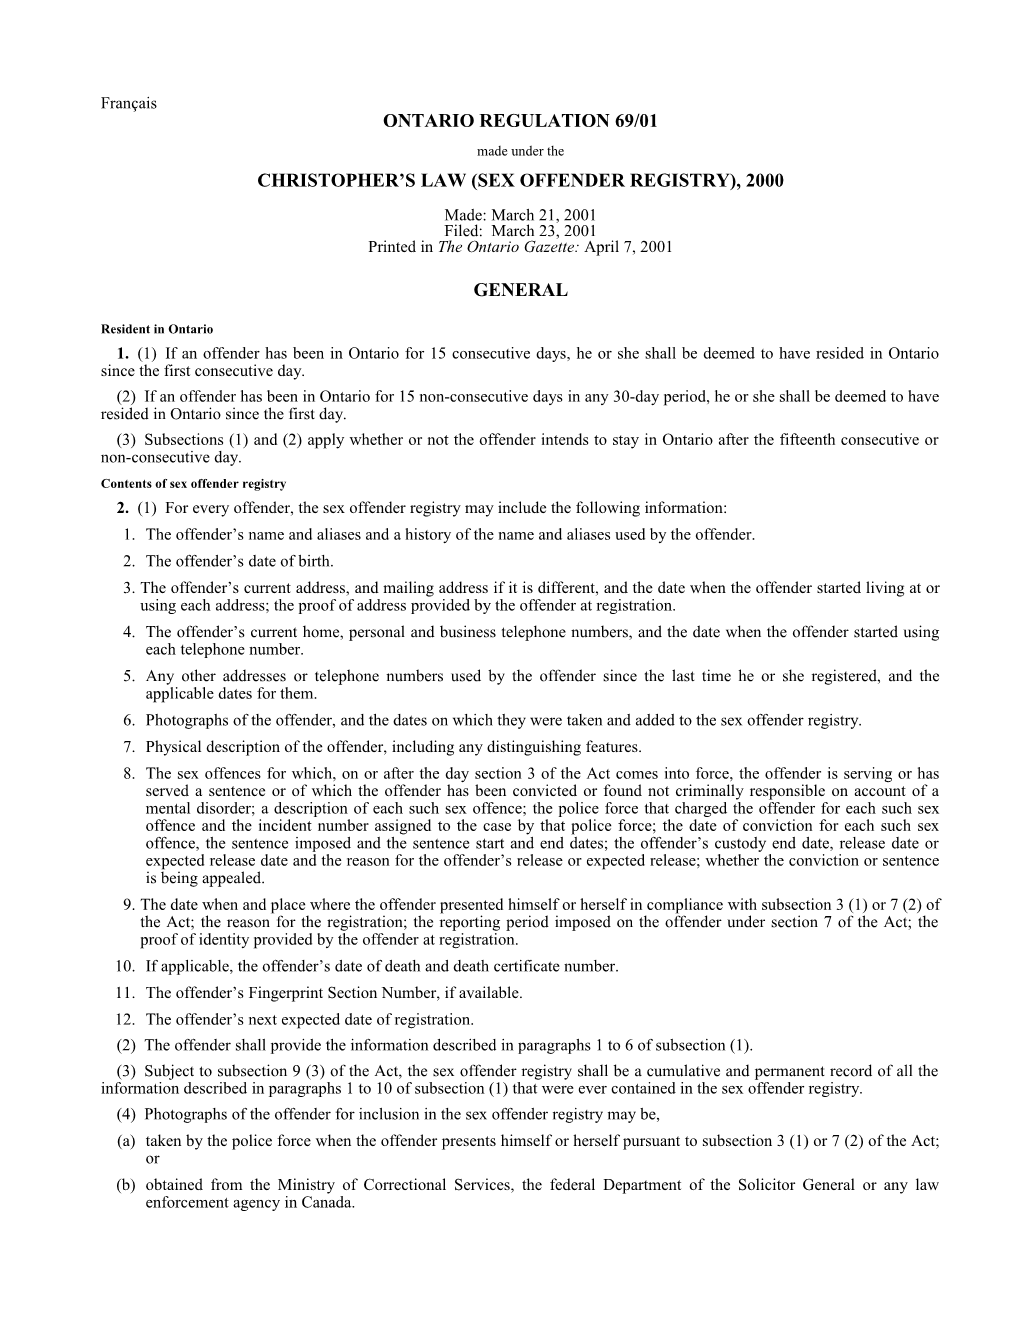 CHRISTOPHER S LAW (SEX OFFENDER REGISTRY), 2000 - O. Reg. 69/01